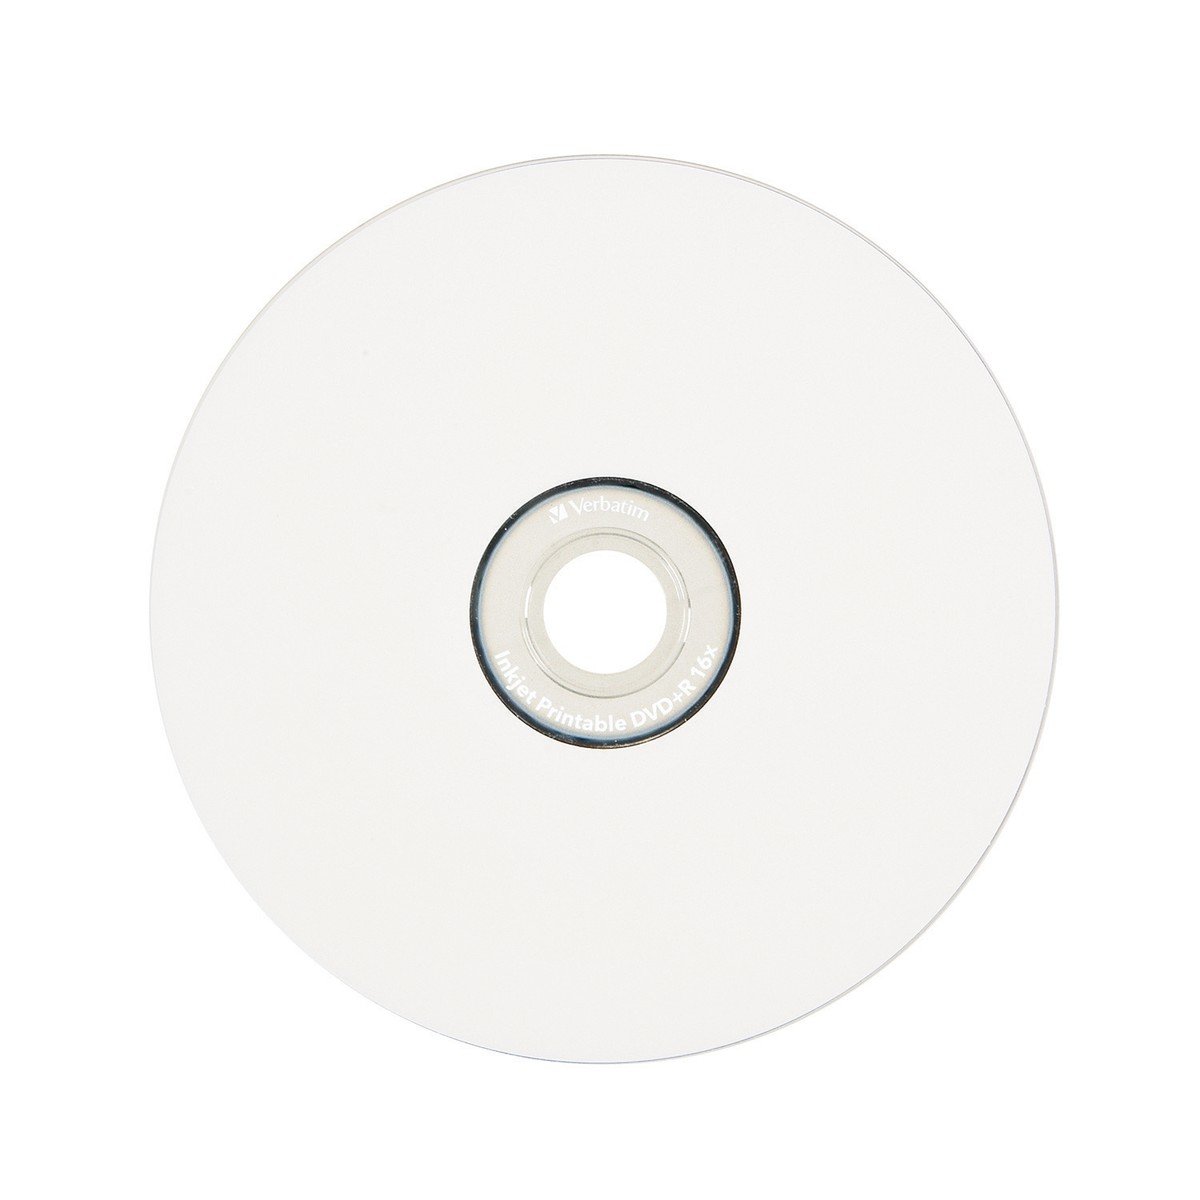 Verbatim DVD+R 4.7GB 16X White Inkjet Printable - 100pk Spindle